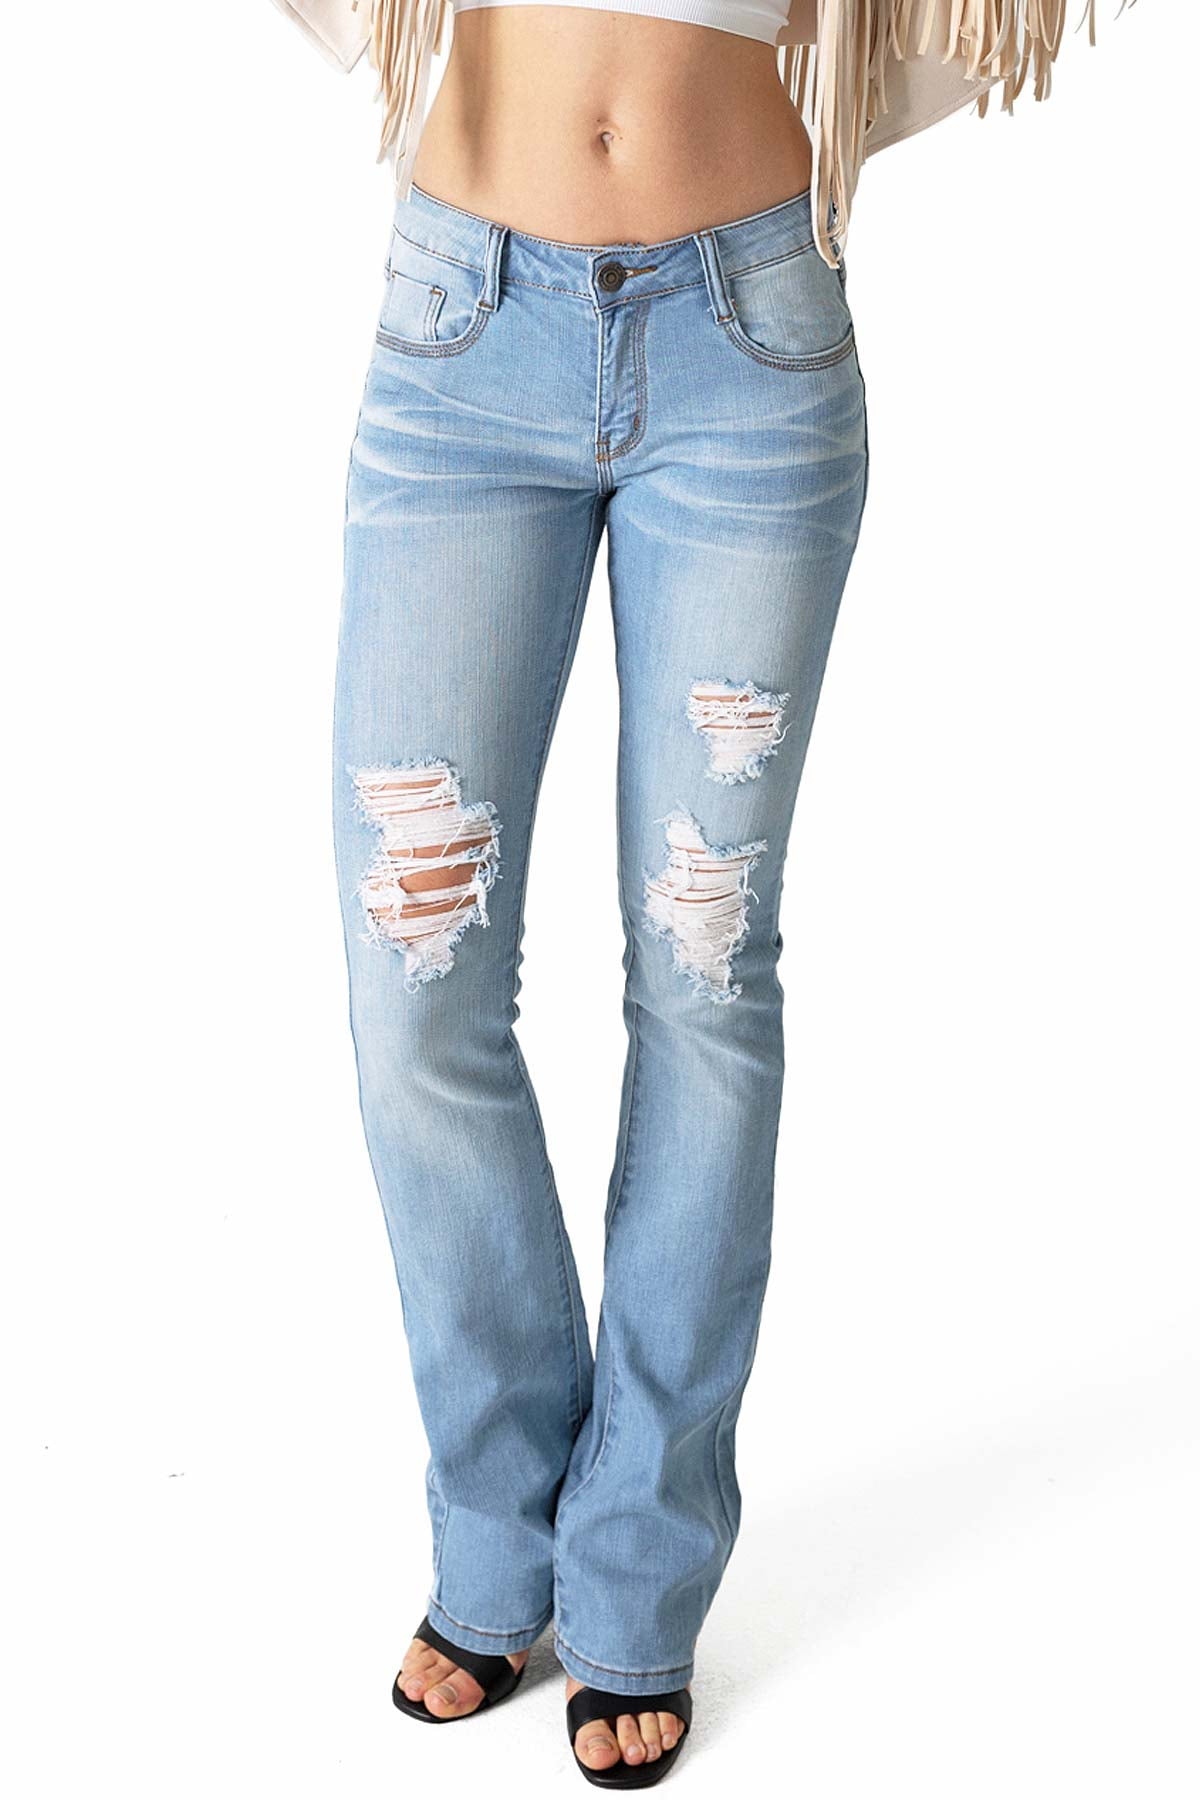 Machine Jeans Women's Juniors Mid Waist Distressed Bootcut Jeans (3, Light  Denim) 